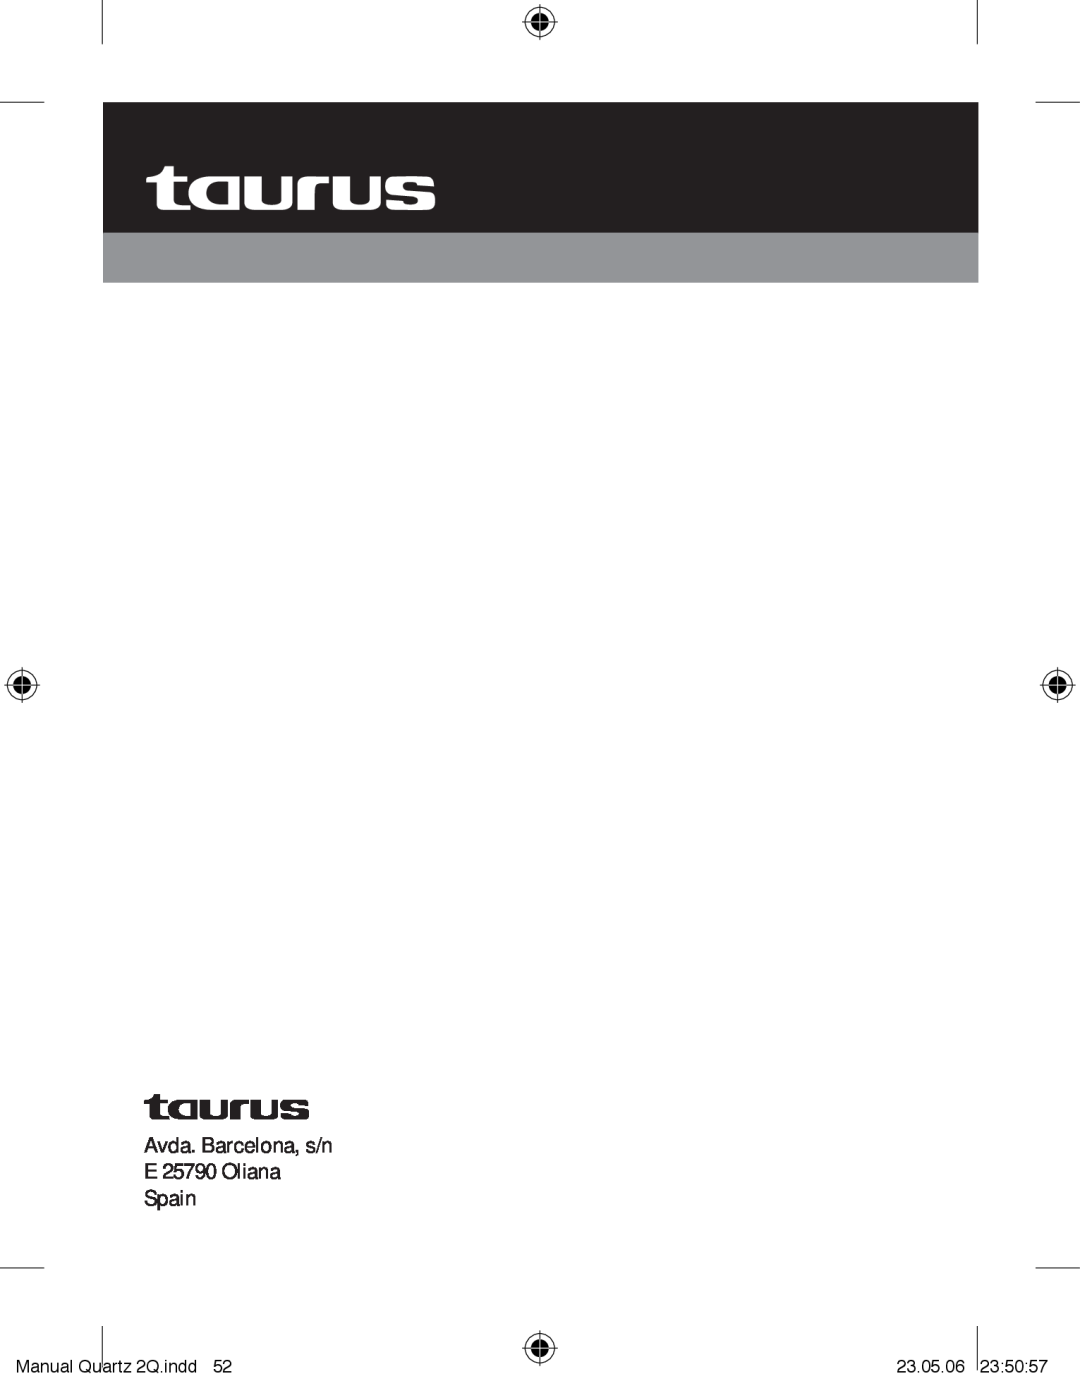 Taurus Group QUARTZ2Q manual Avda. Barcelona, s/n E 25790 Oliana Spain, Manual Quartz 2Q.indd, 23.05.06 